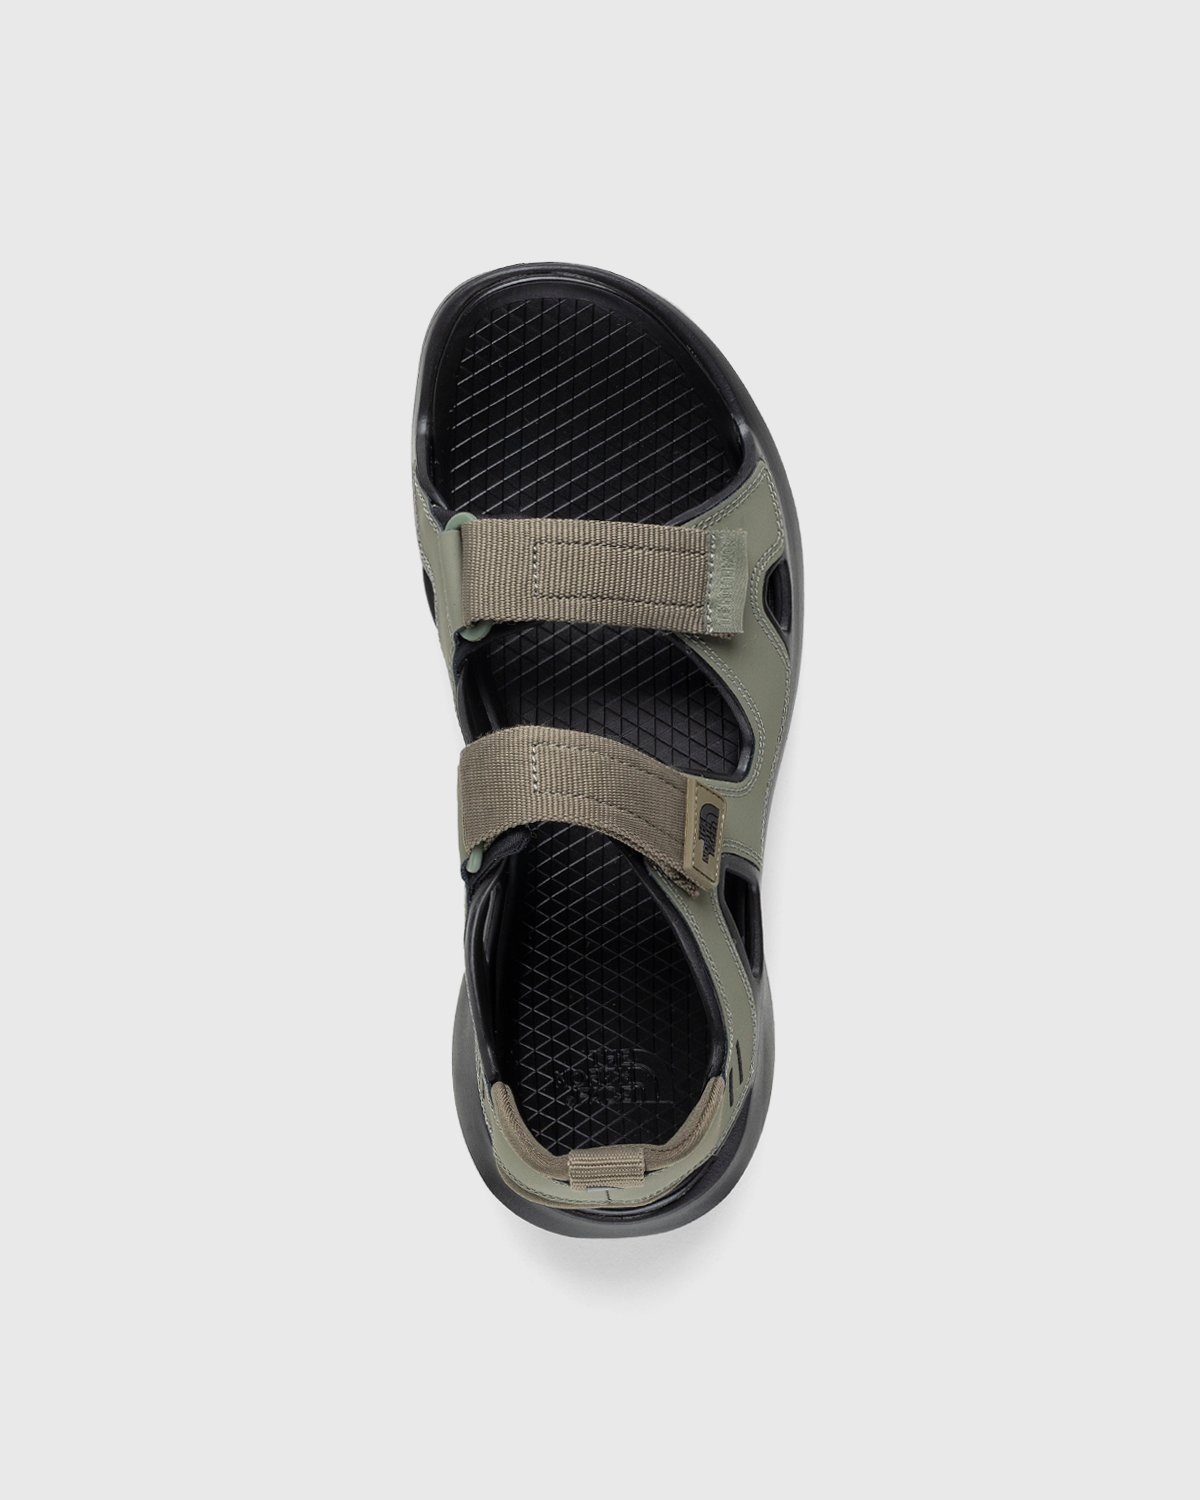 The North Face - Hedgehog Sandal III Burnt Olive Green/Black - Footwear - Green - Image 3